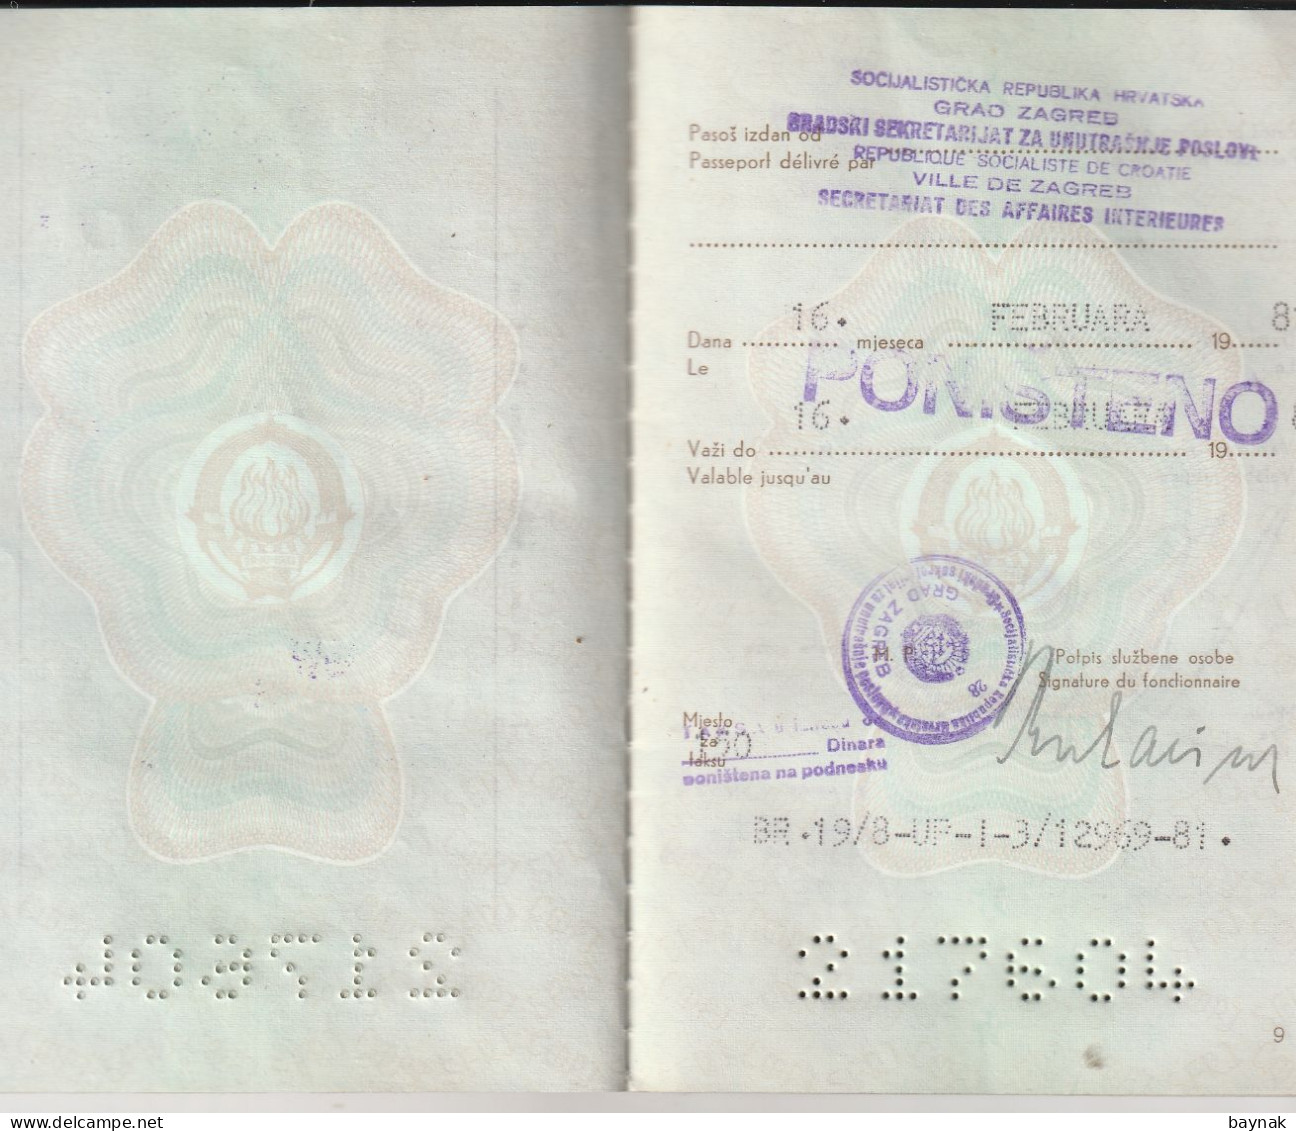 P304 -   SFR YUGOSLAVIA   --  PASSPORT    -  LADY  - 1981  --  VISA:  KENYA  ( EAST AFRICA ), MALAYSIA, SINGAPORE, - Documentos Históricos